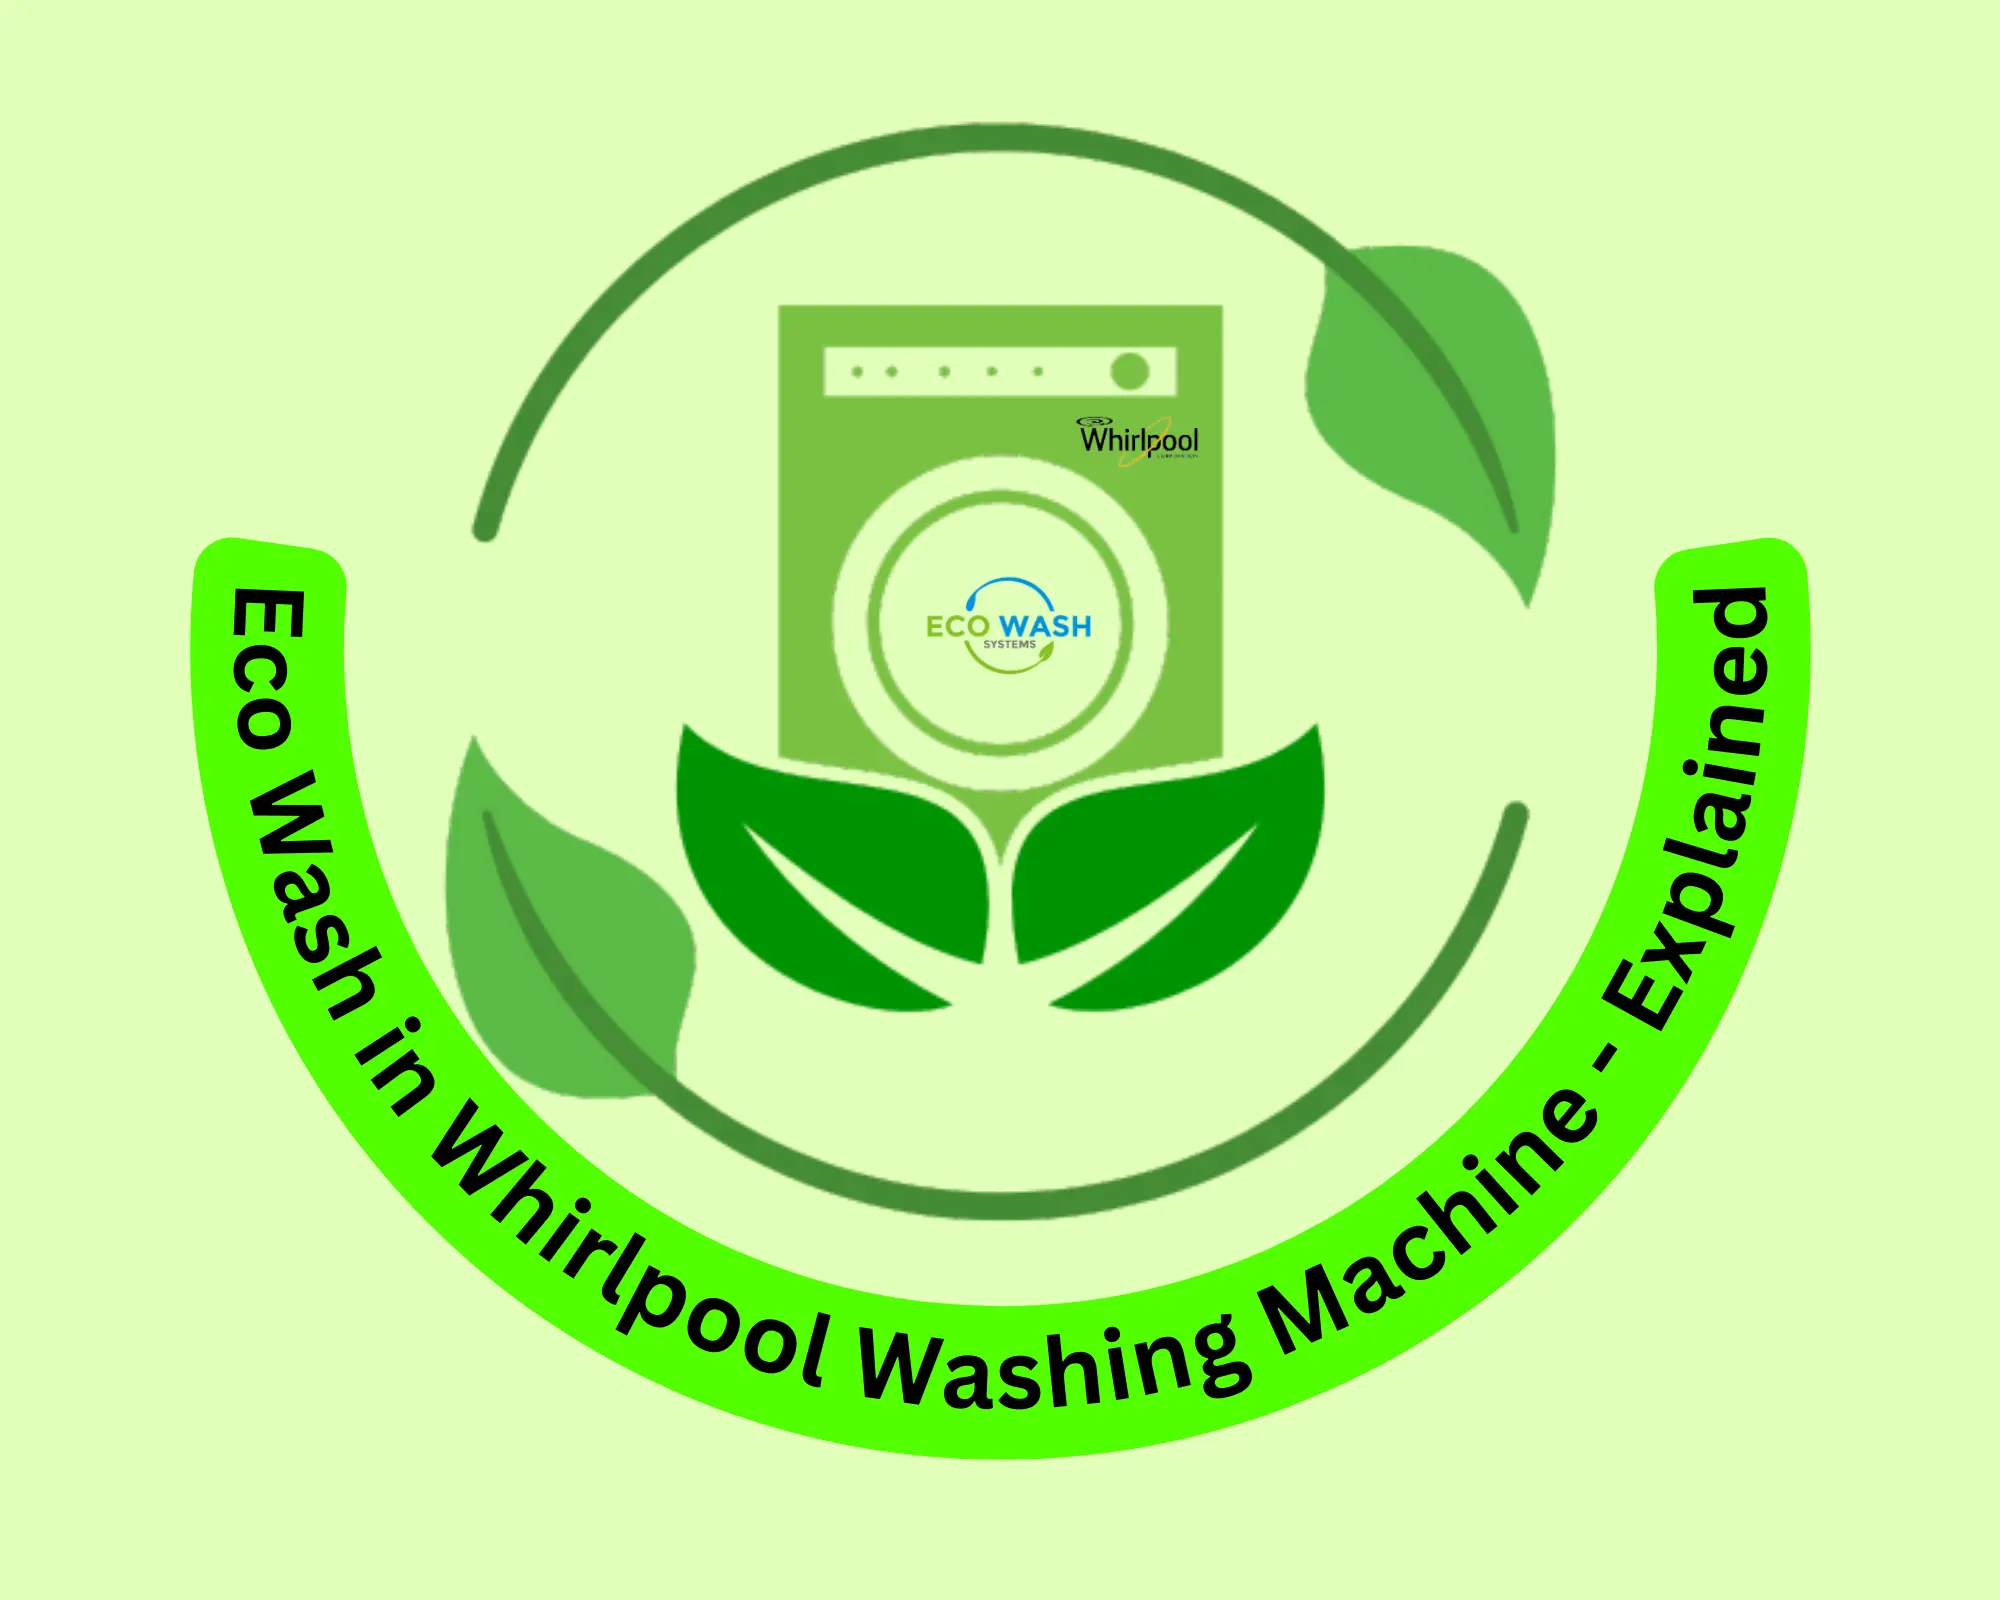 Eco Wash in Whirlpool Washing Machine  - Explained